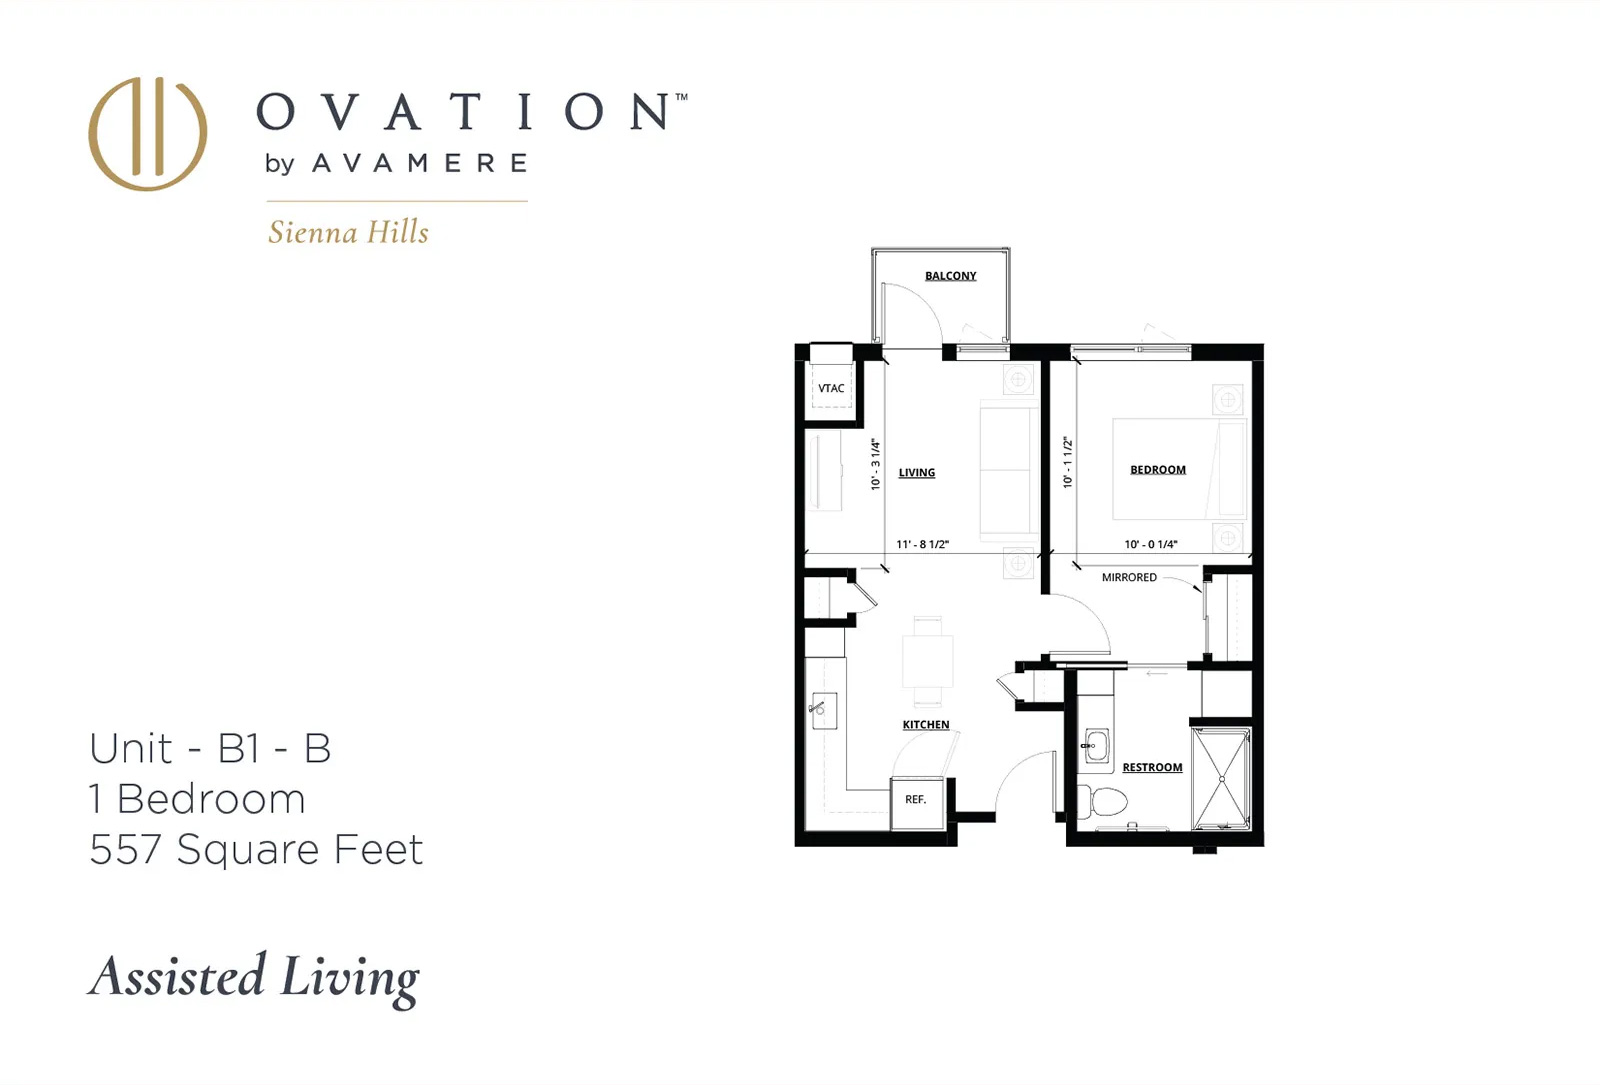 Ovation Sienna Hills 1 Bedroom Floorplan 557 sq ft